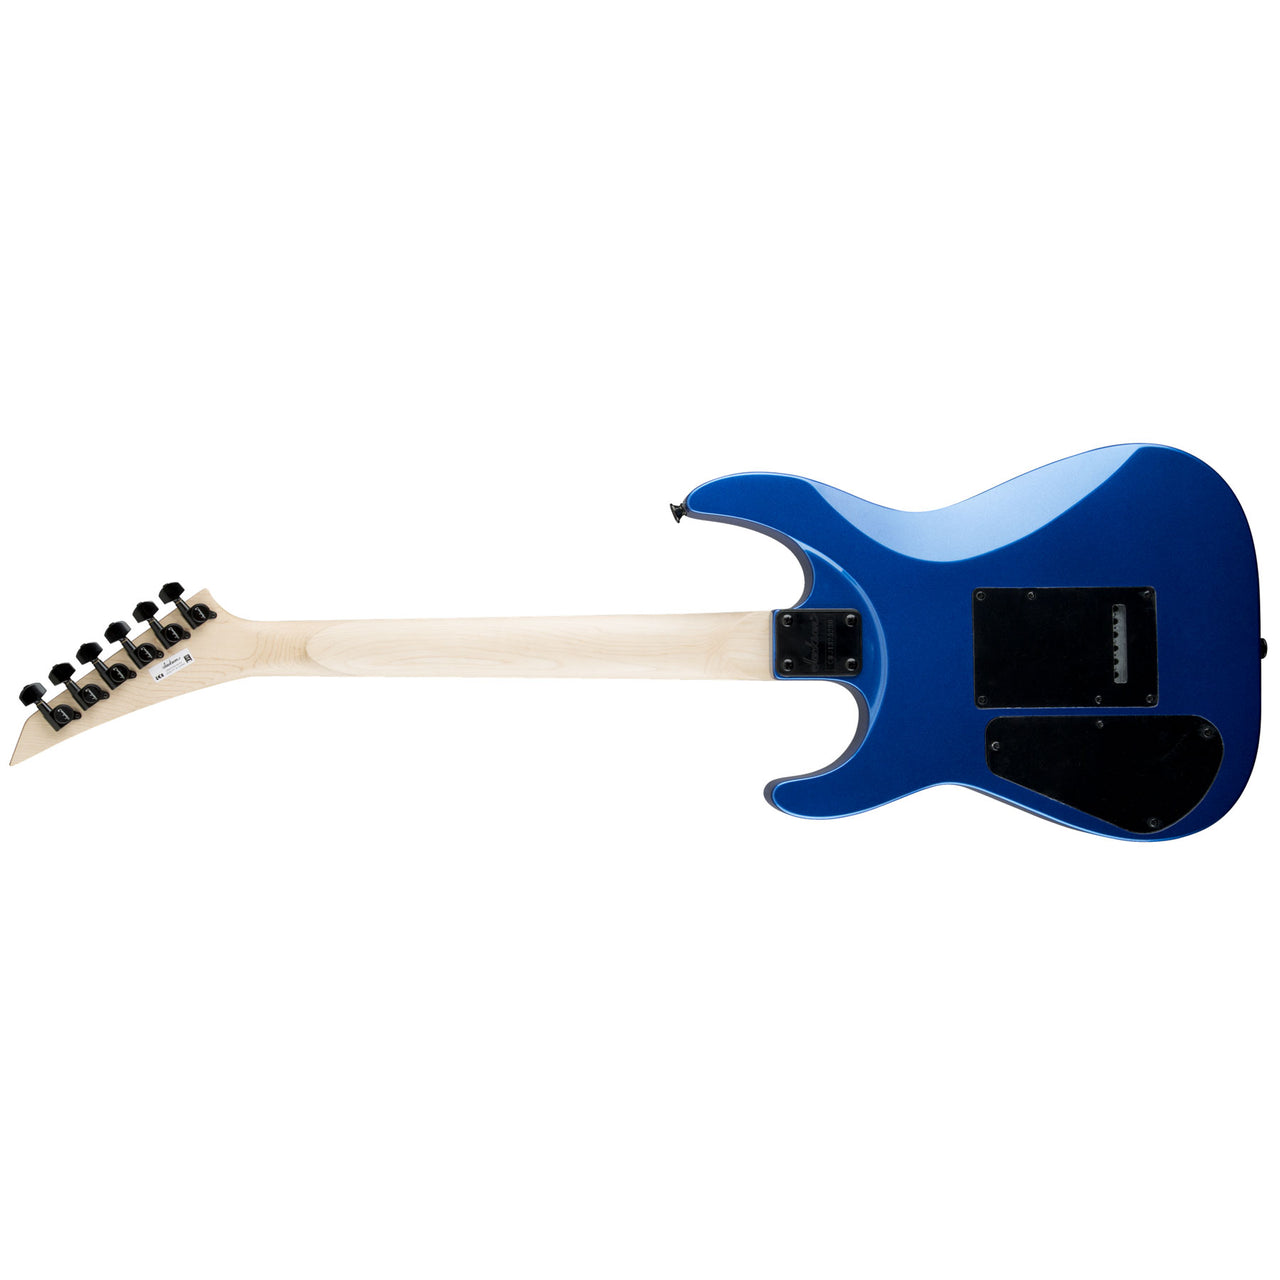 Guitarra Eléctrica Jackson Js11 Dk Metallic Blue 2910121527